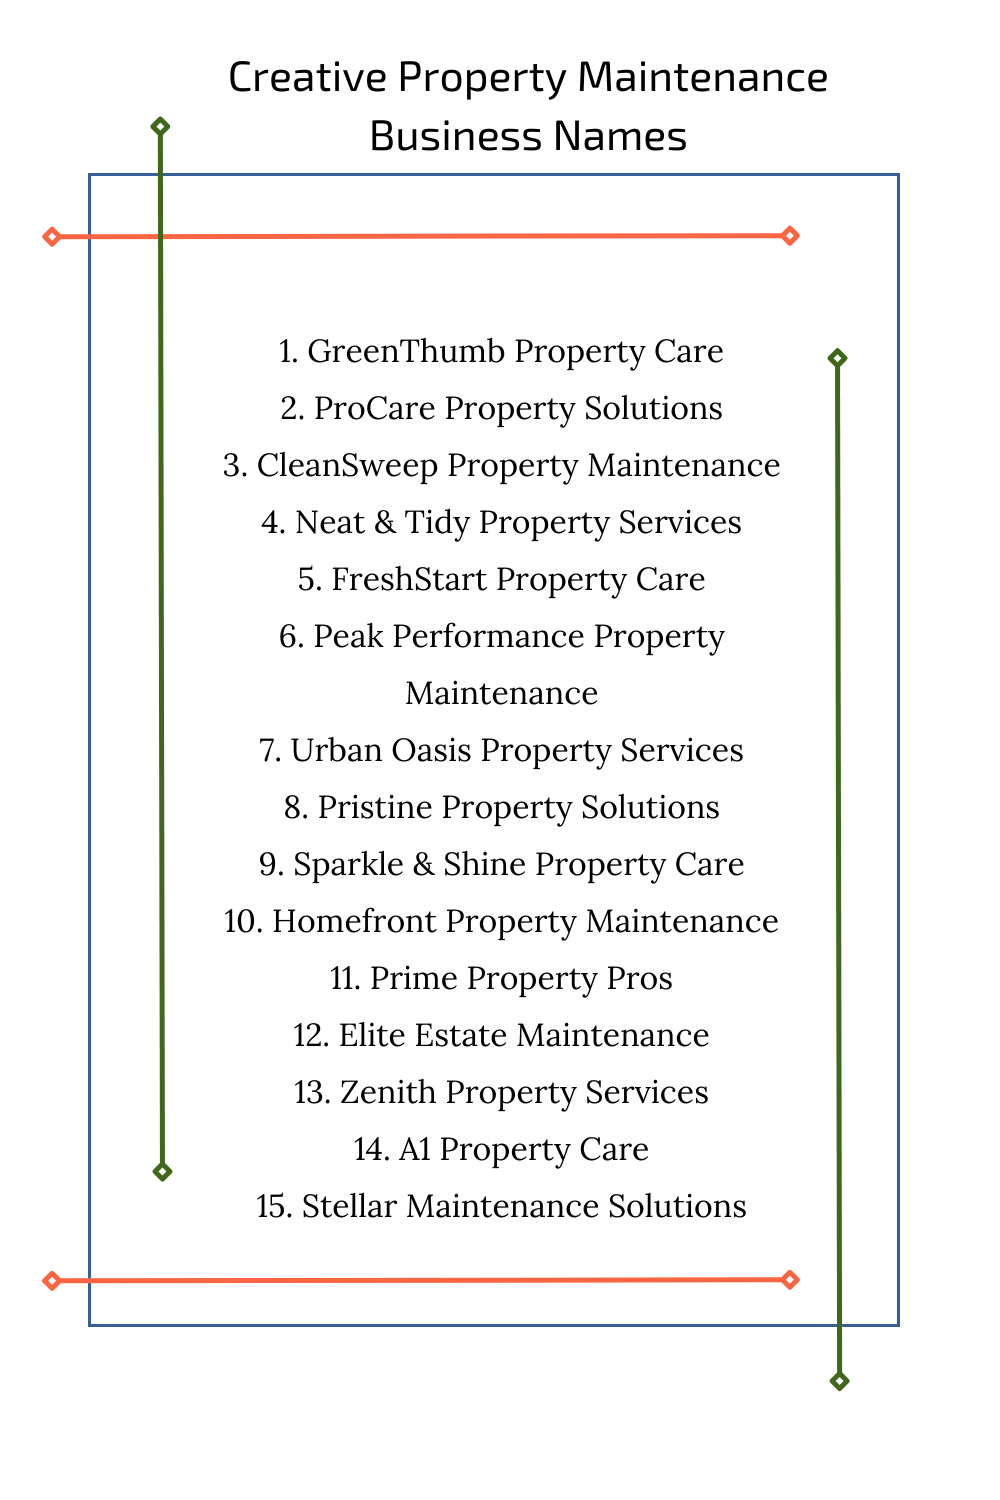 Creative Property Maintenance Business Names